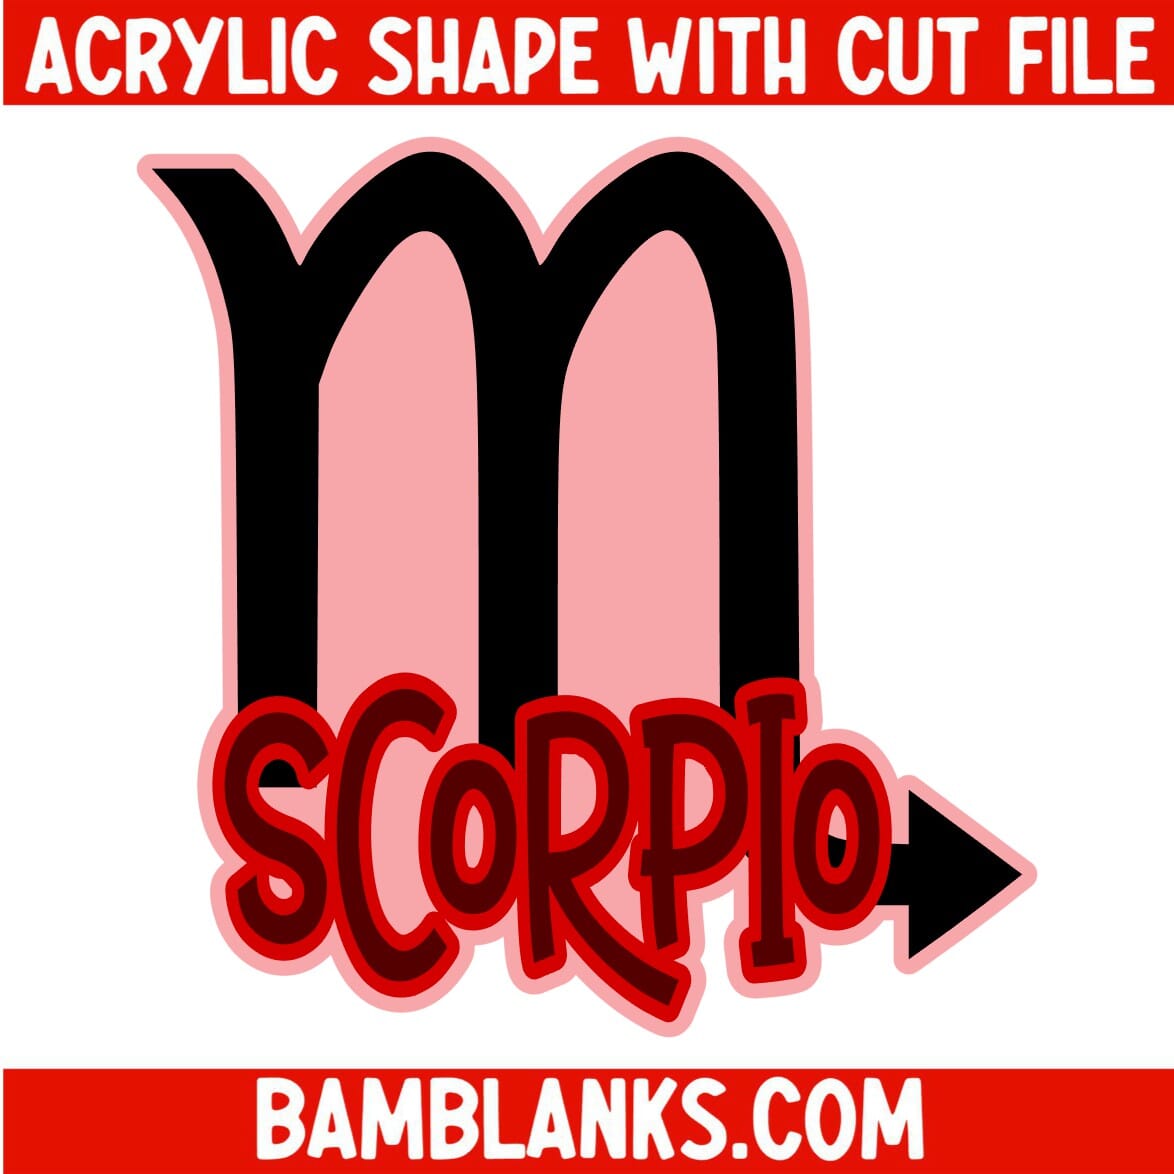 Scorpio - Acrylic Shape #1223